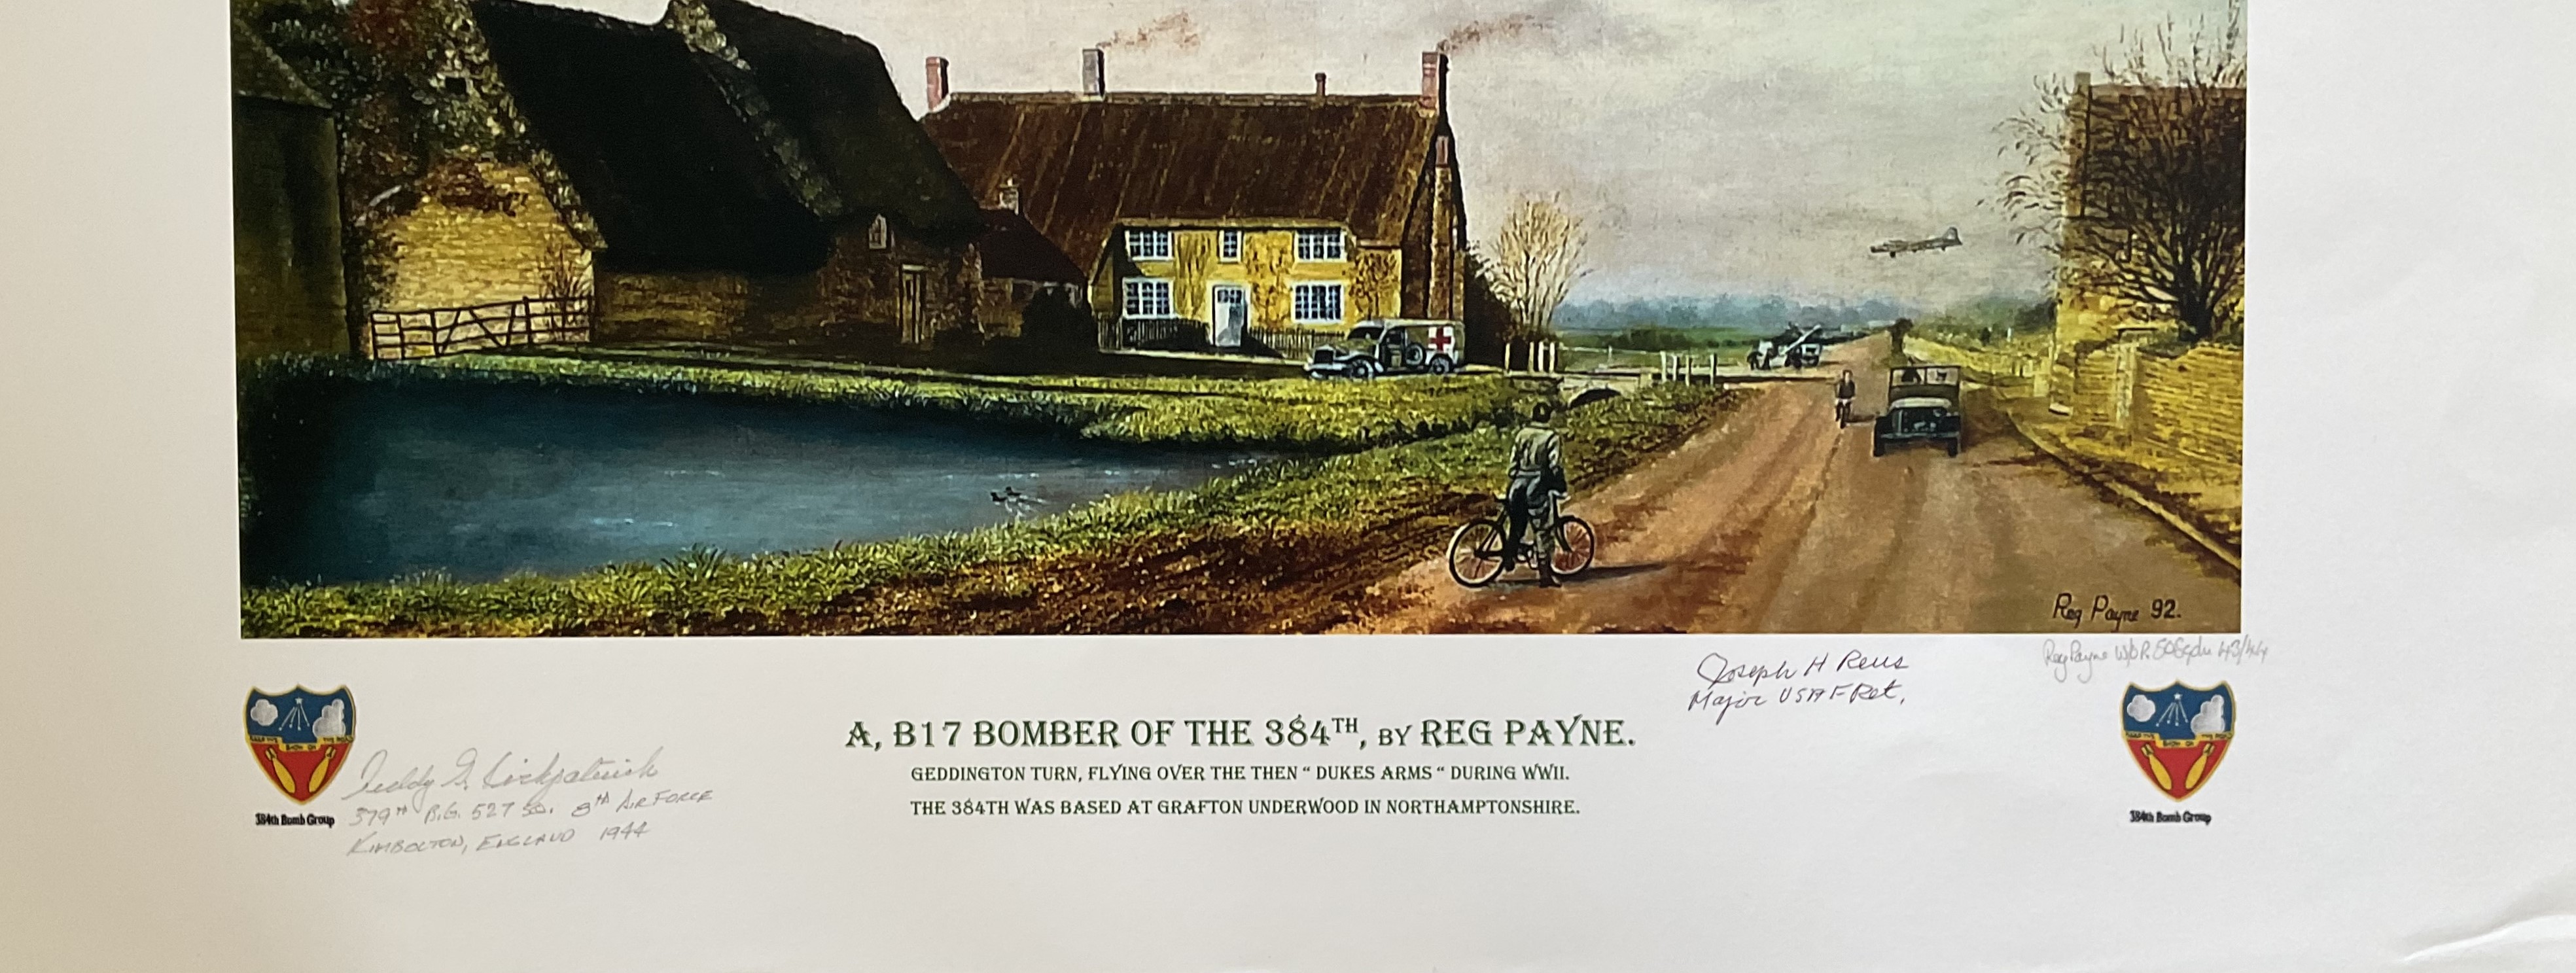 A B17 Bomber of The 384th U.S.A.A.F. By Reg Payne, Large Colour Print Signed by 2 Major Joseph J - Image 2 of 2